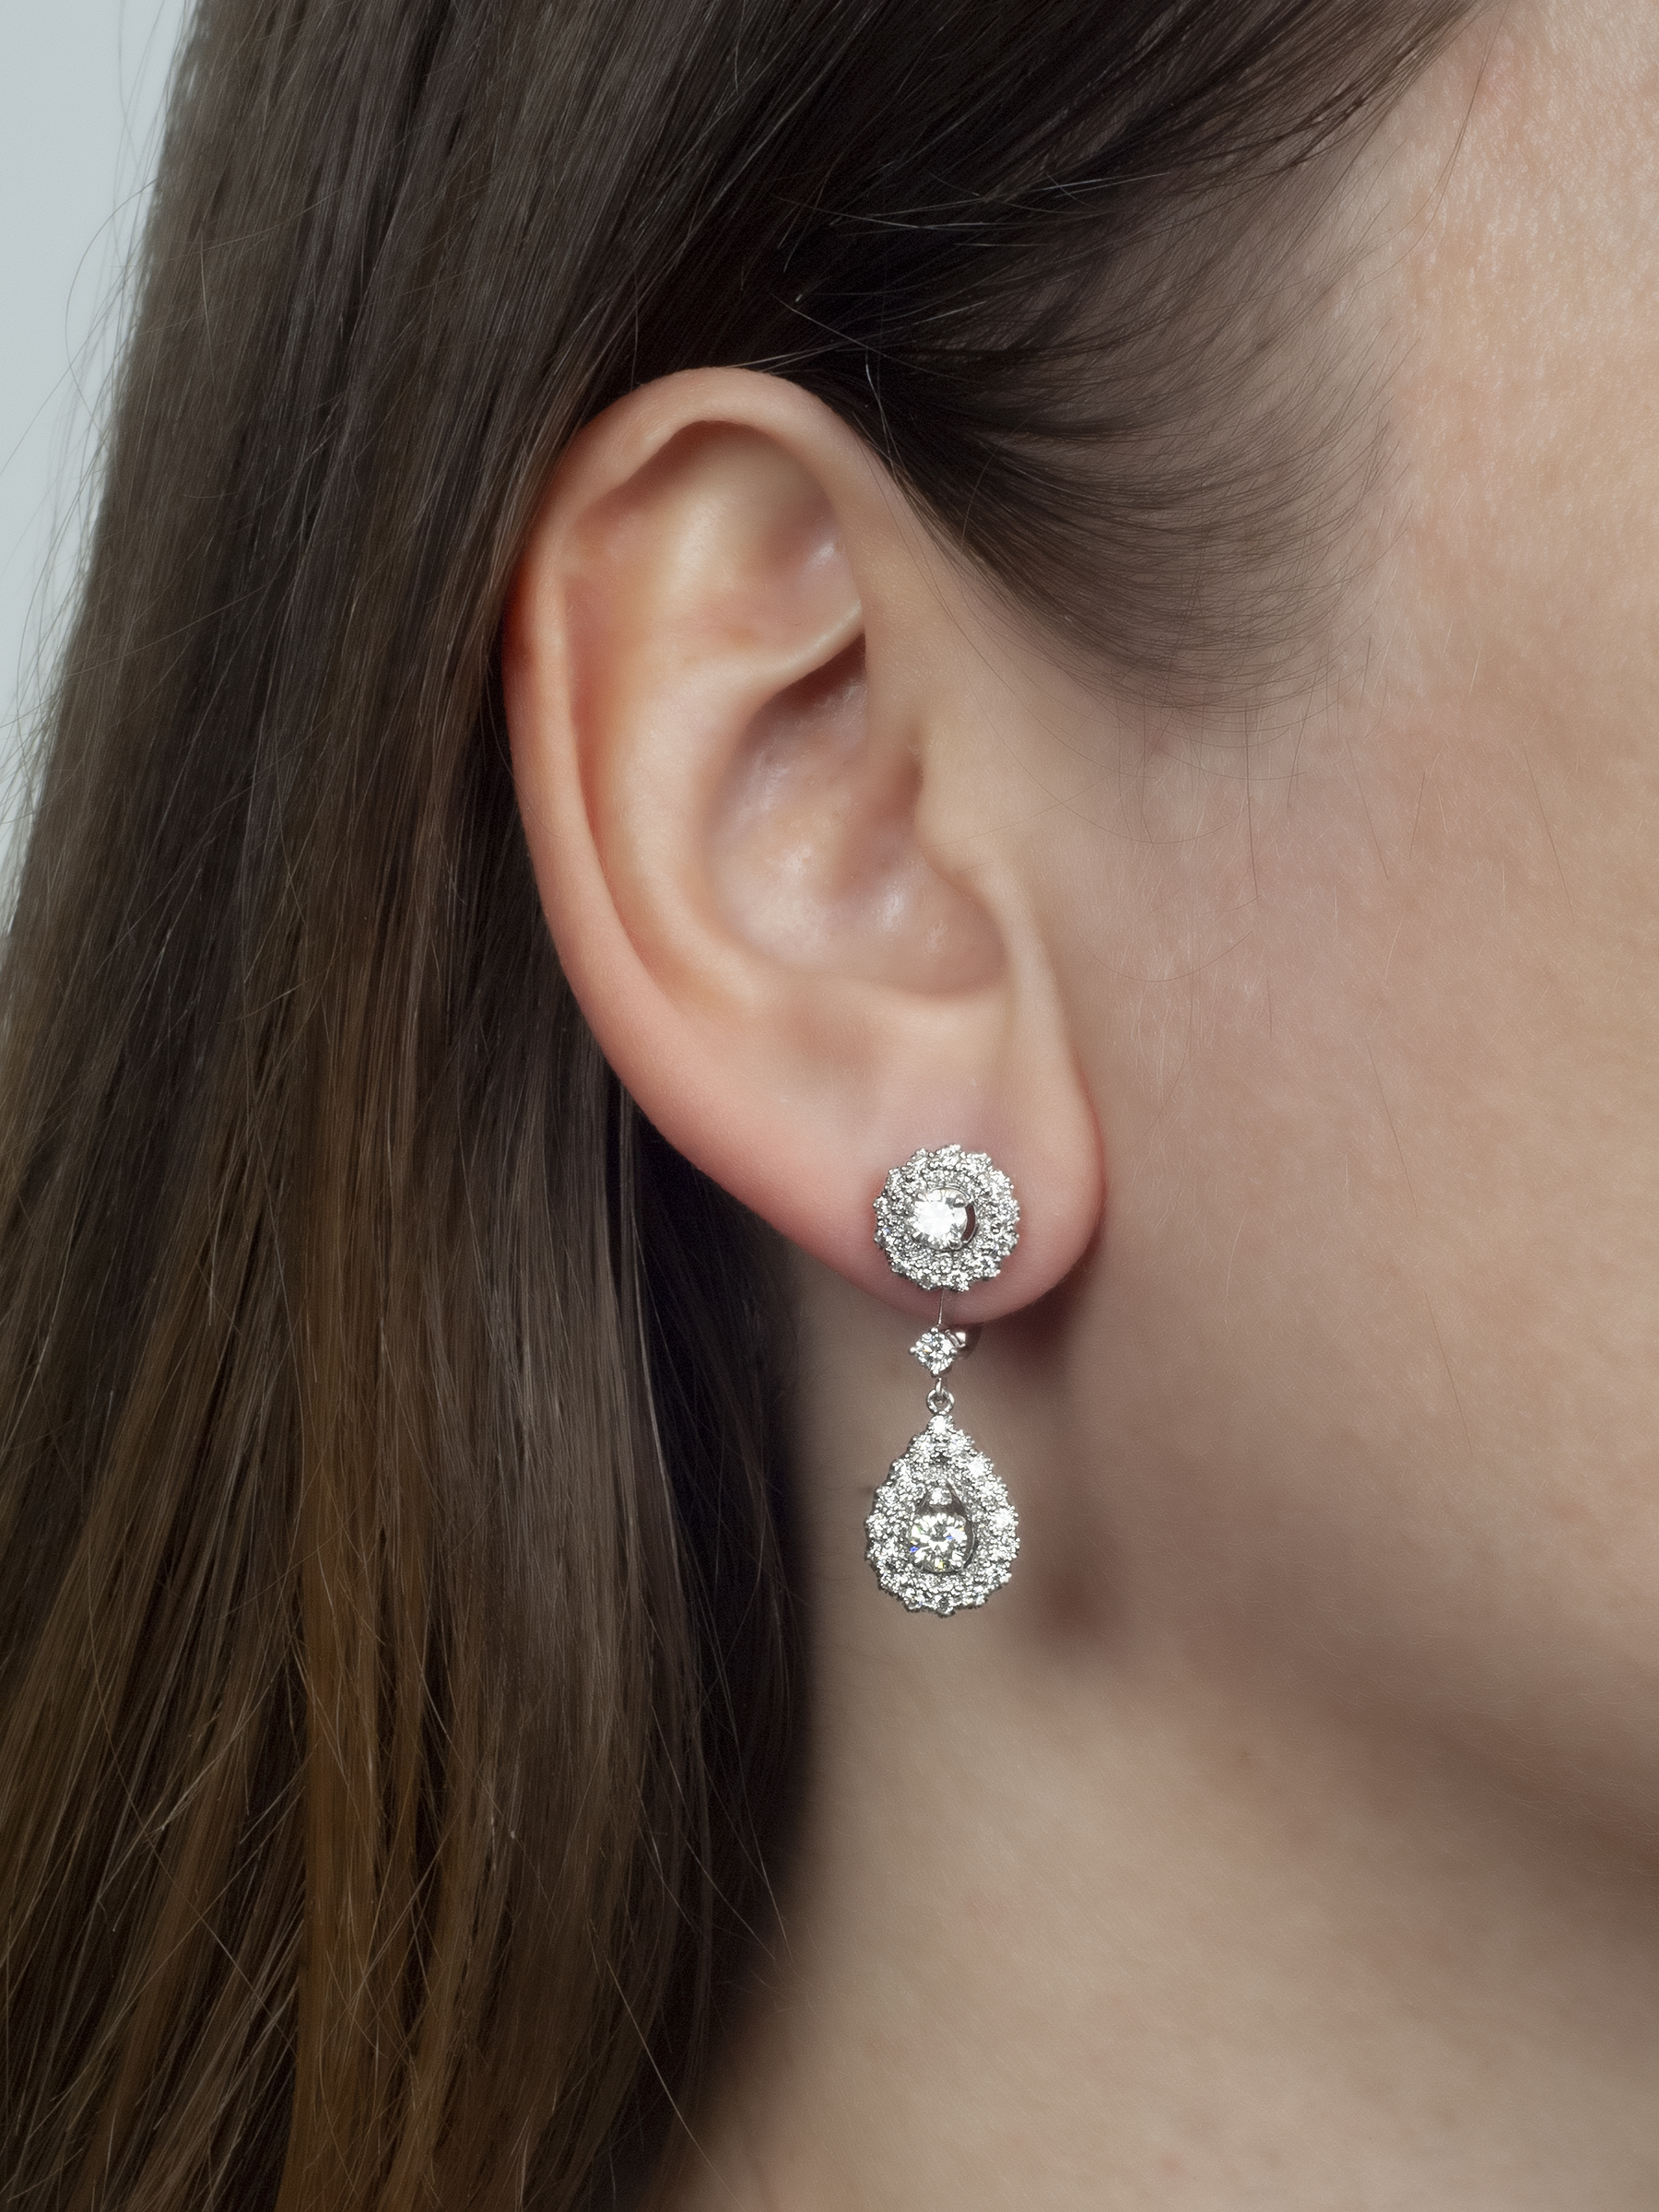 Серьги No name white gold diamond 1.67 ct. earrings